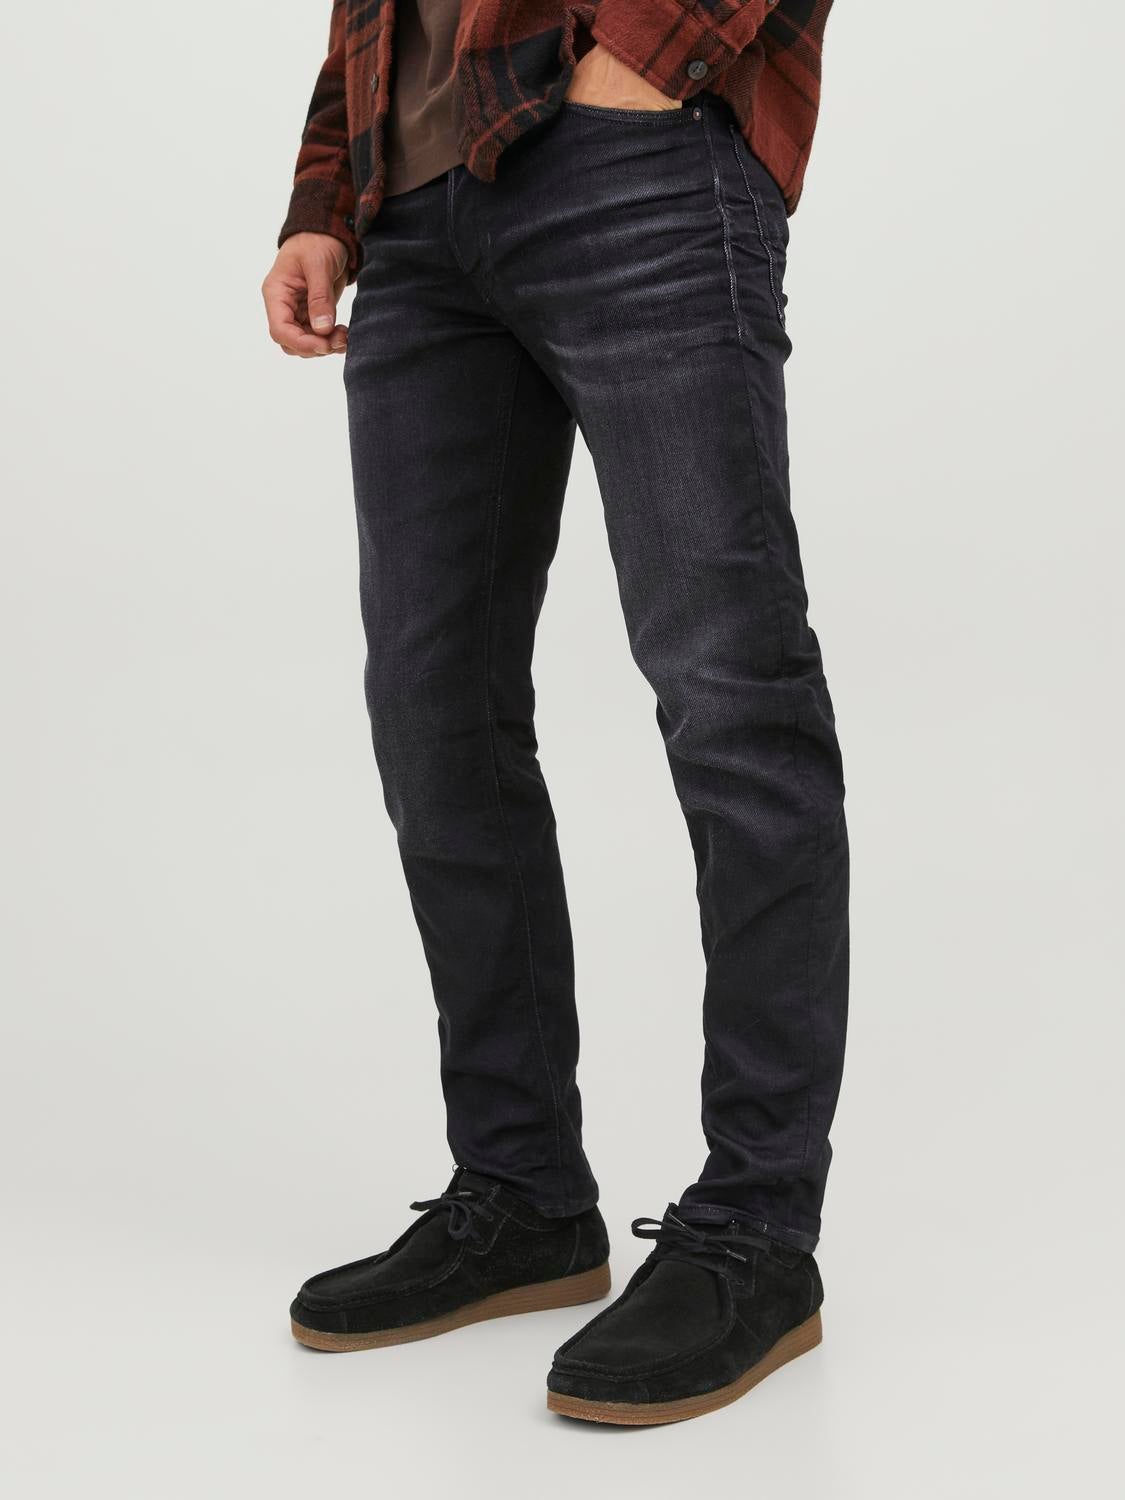 Gray XS discount 57% Jack & Jones shorts jeans MEN FASHION Jeans Basic 